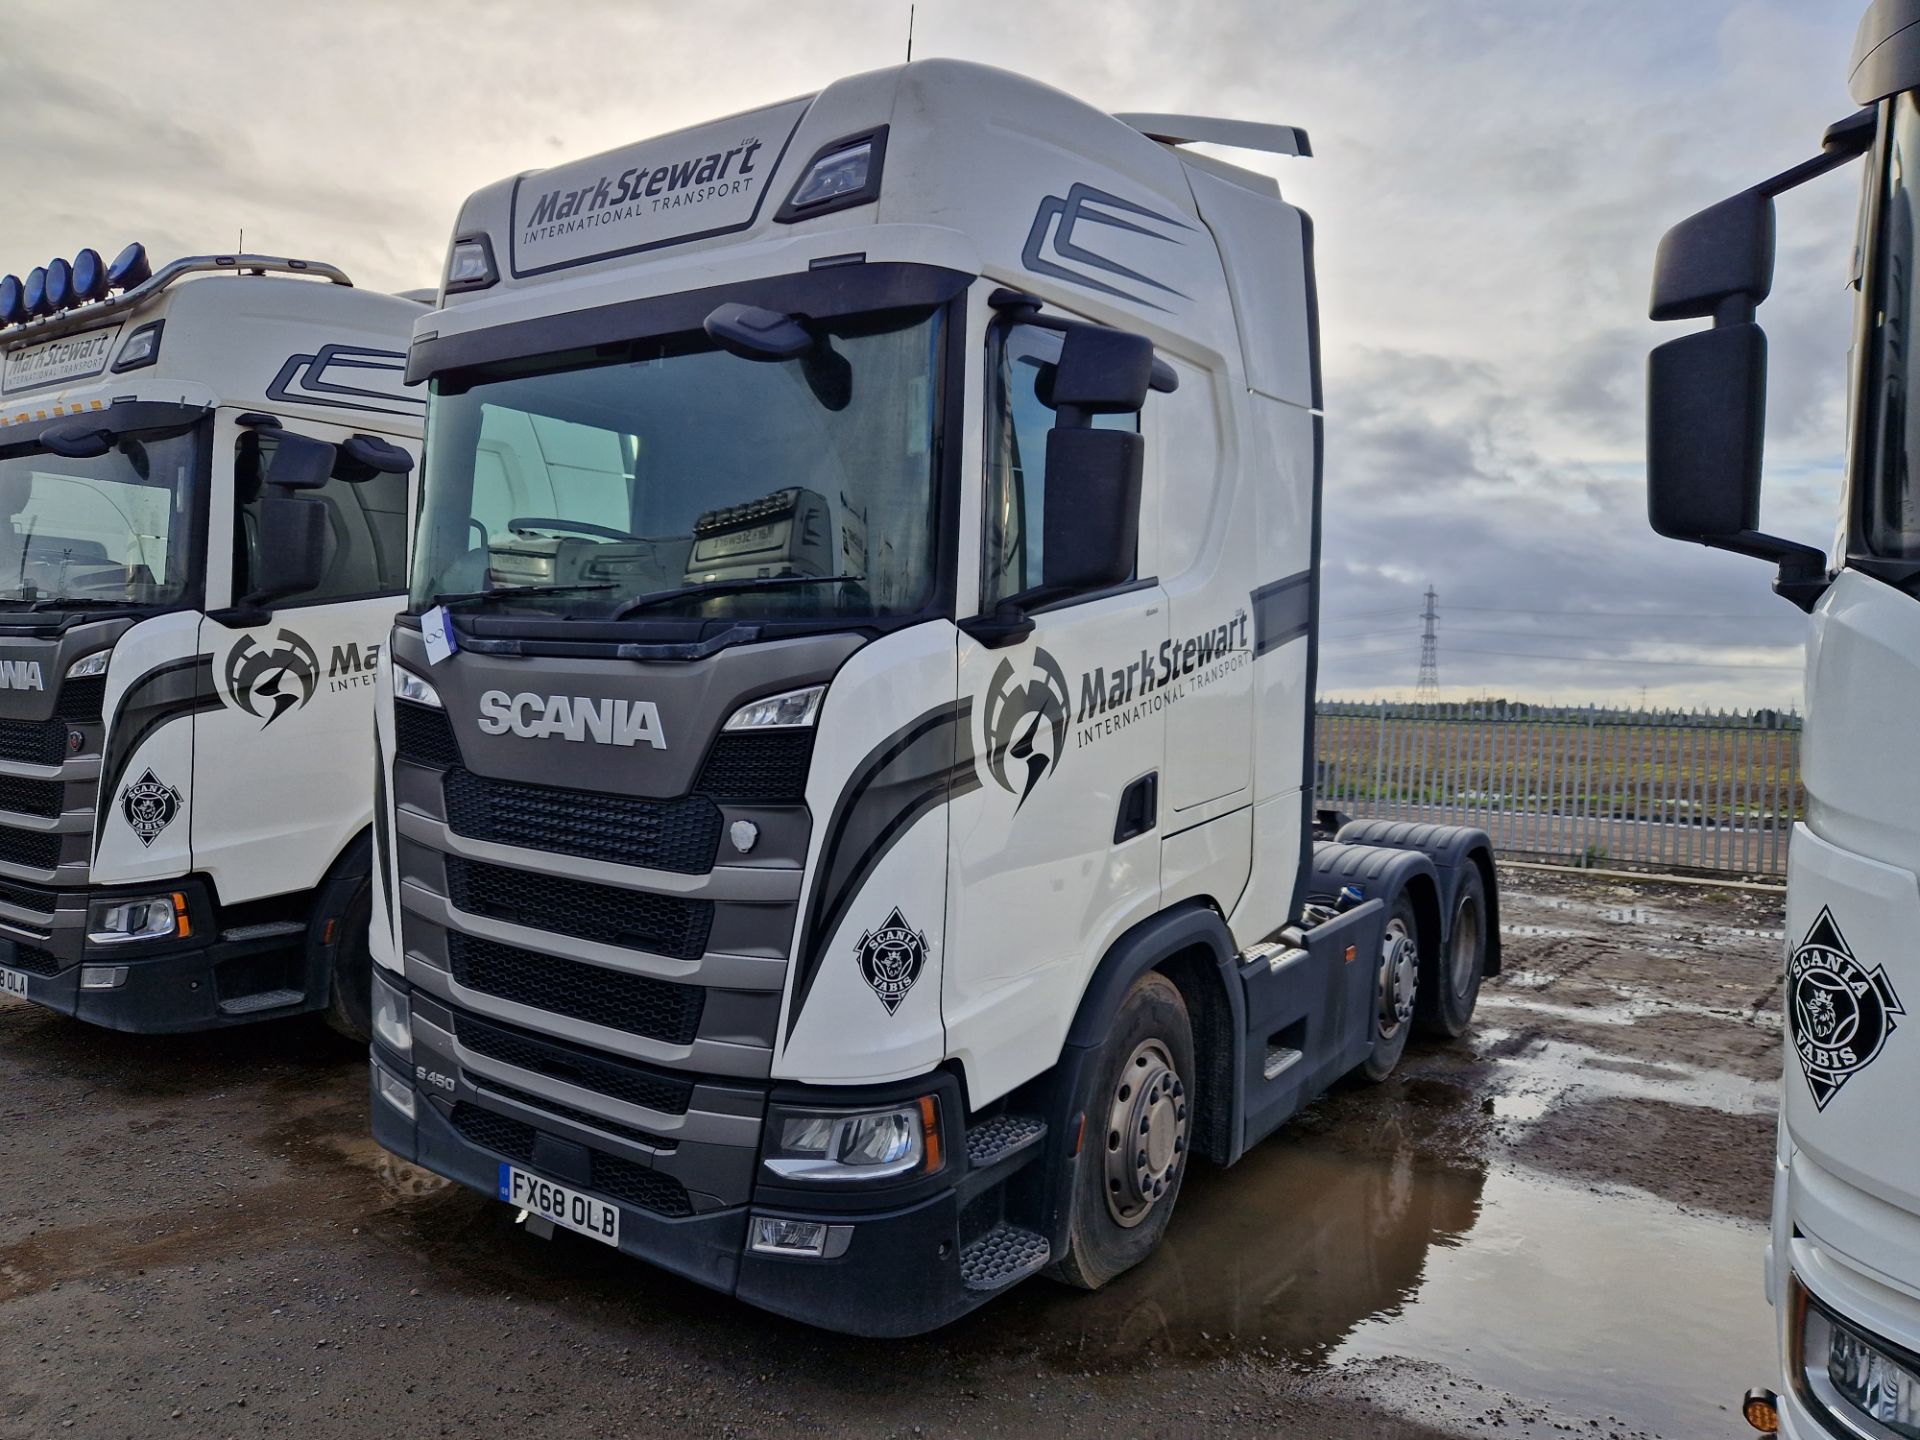 Scania S450 Next Generation 44T 6x2 Tractor Unit with Fridge Freezer, Registration No. FX68 OLB, - Image 2 of 9